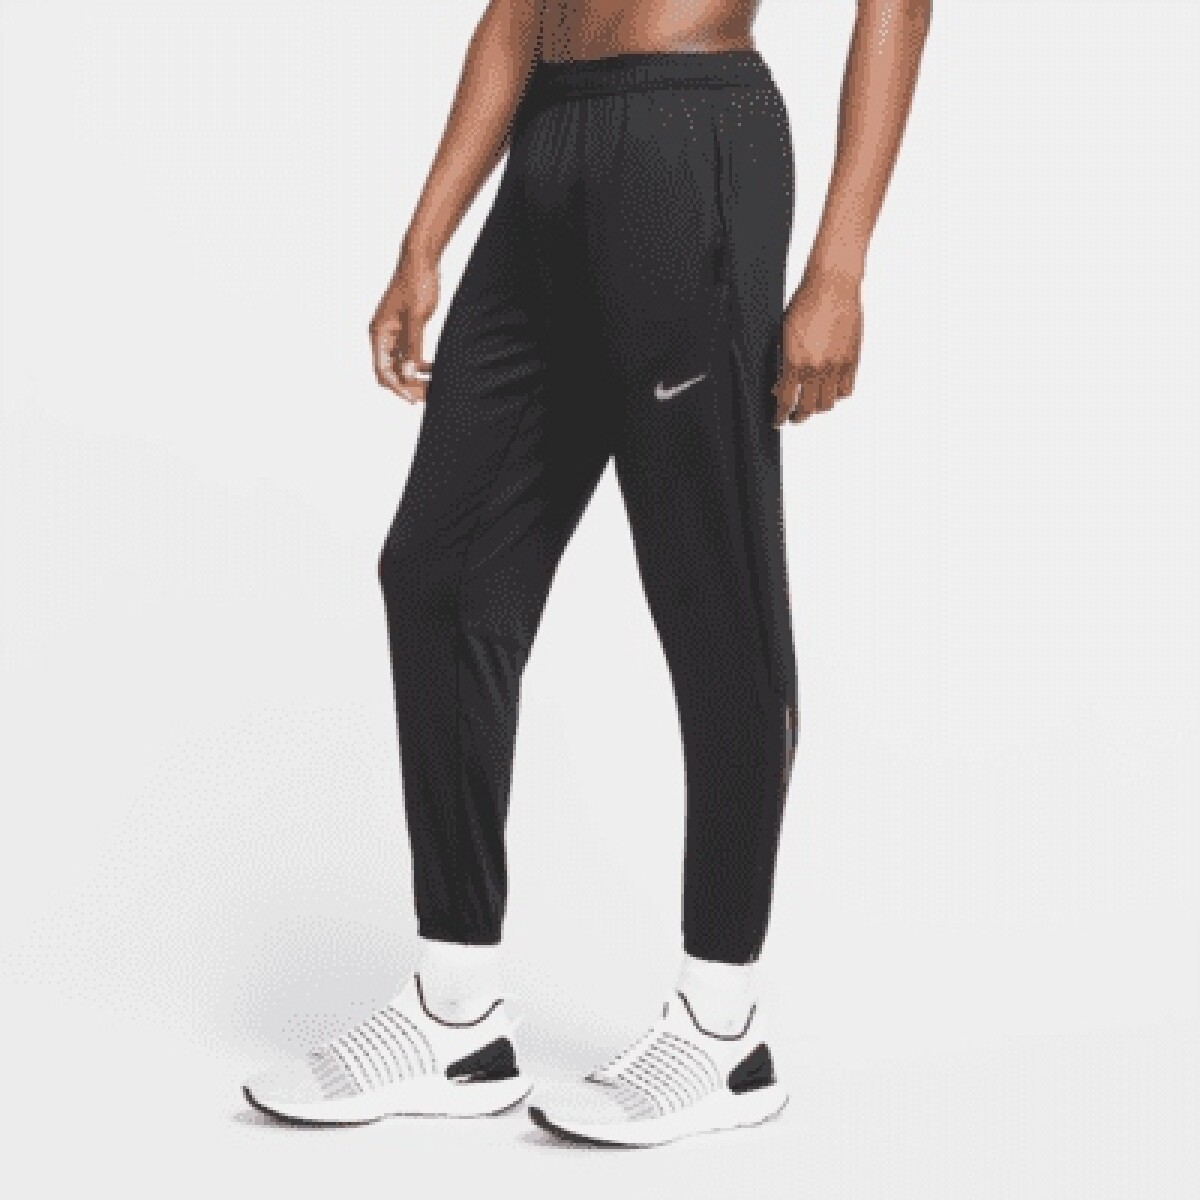 Pantalon Nike Running Hombre Essential Knit - S/C 